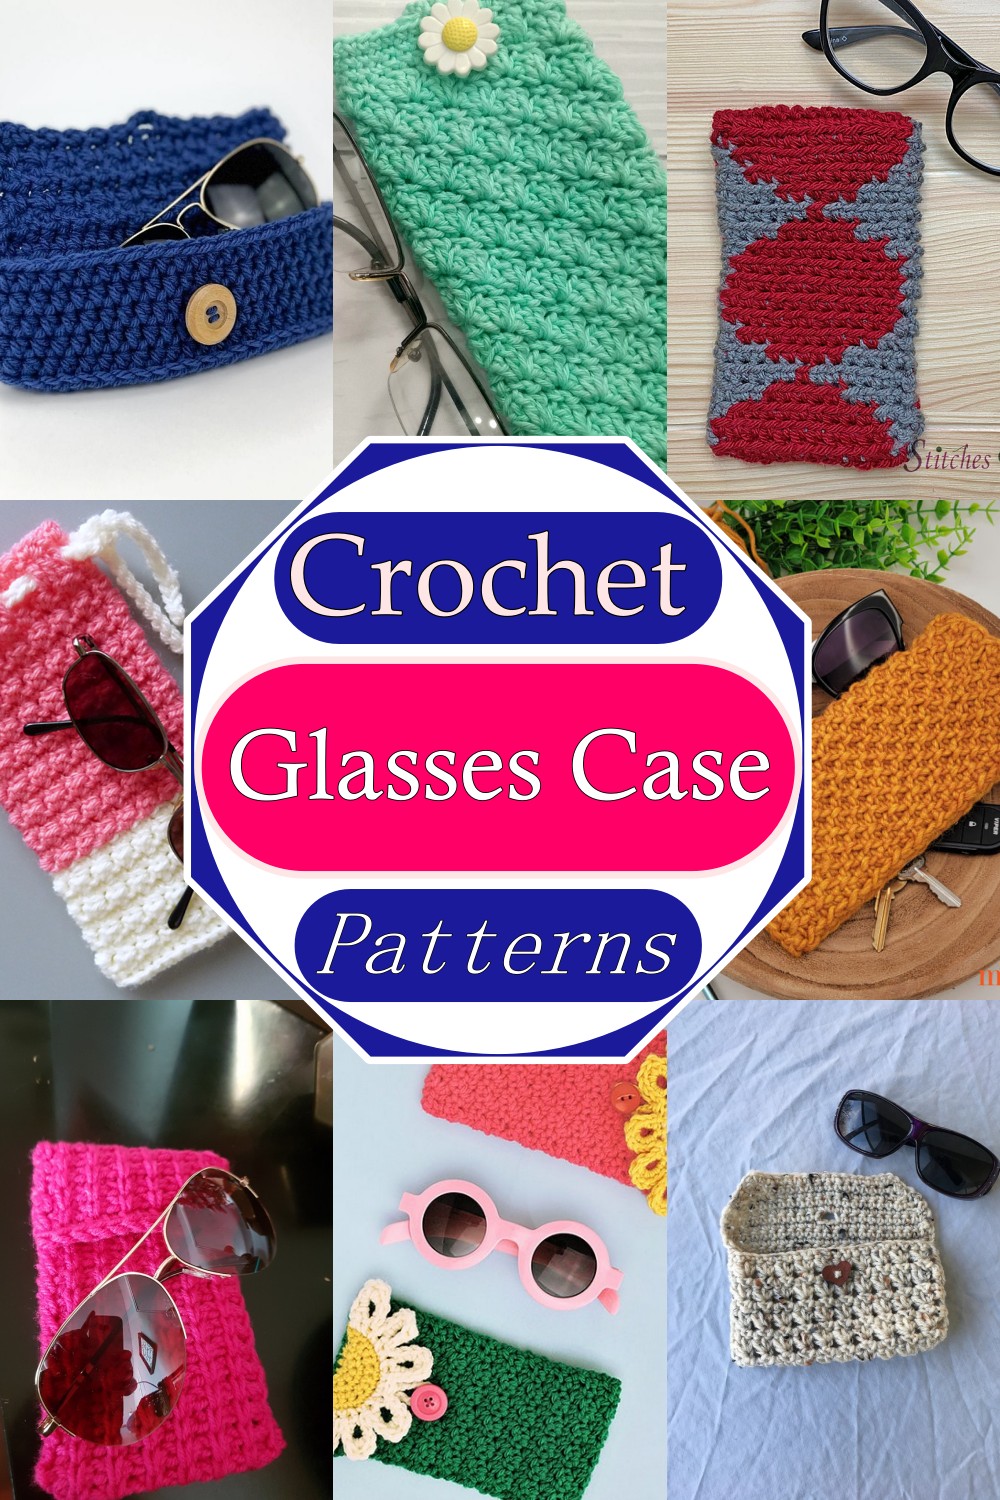 Crochet Glasses Case Patterns